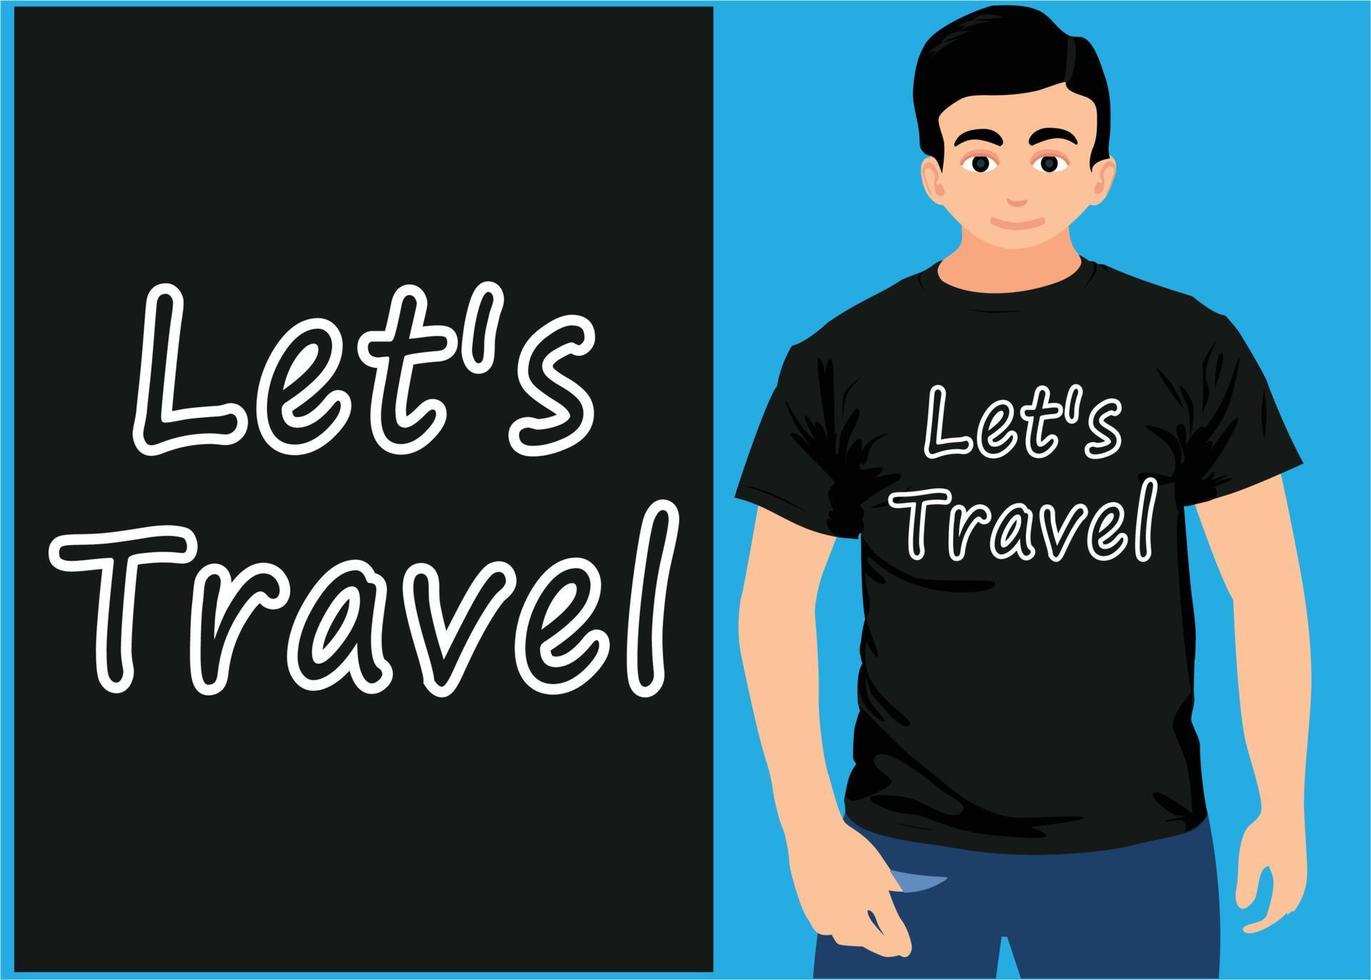 Lets Travel T shirt Design. vector